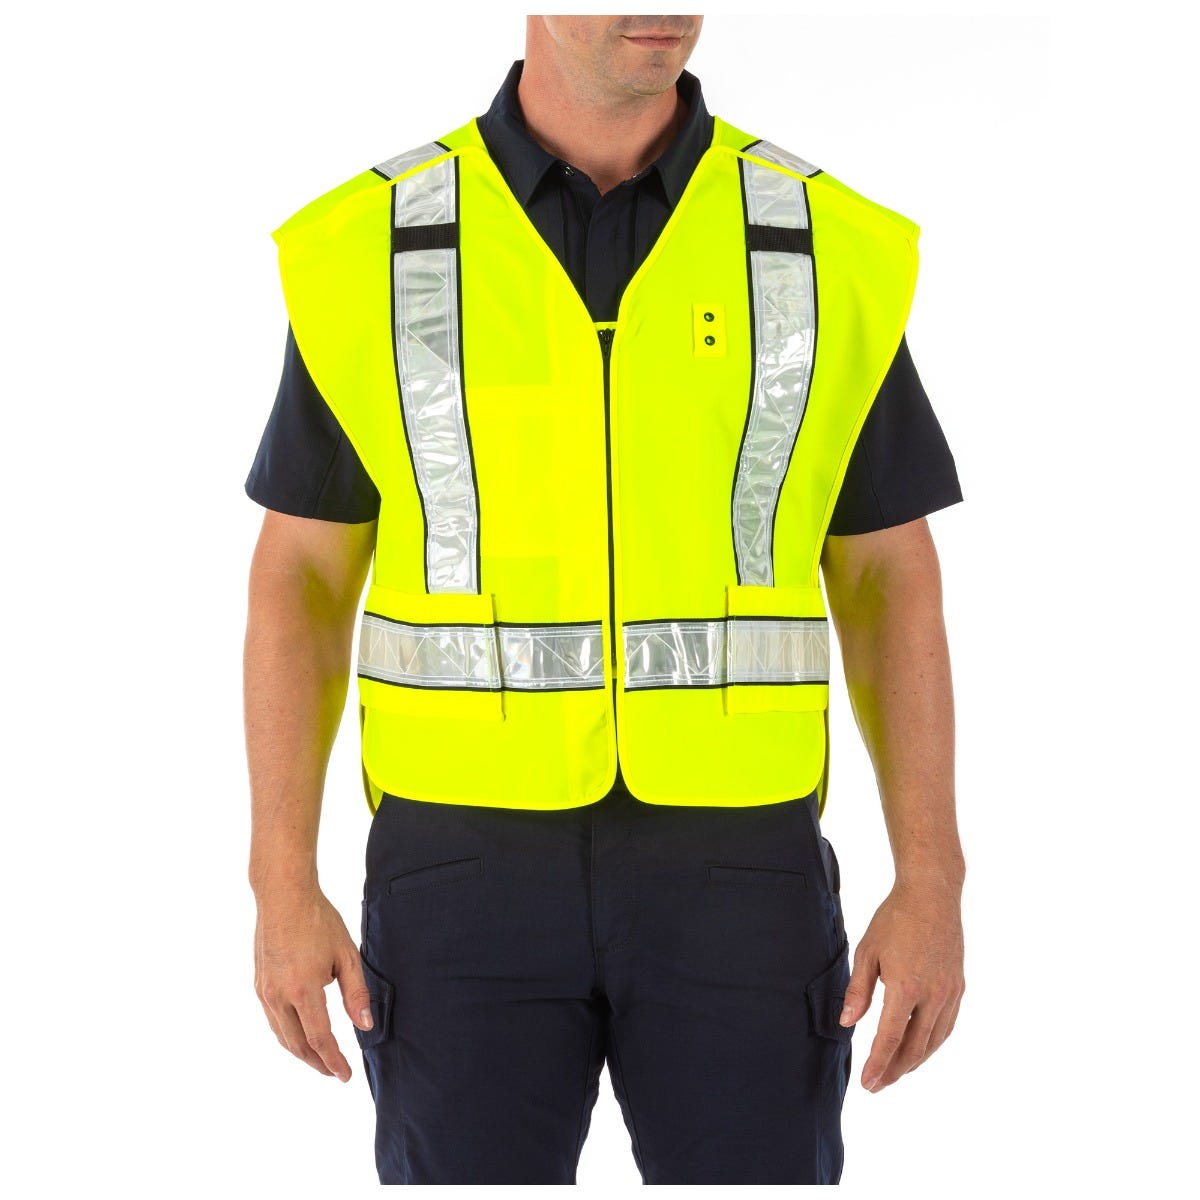 Buy/Shop Vests – Public Safety Online in MI – alliebros